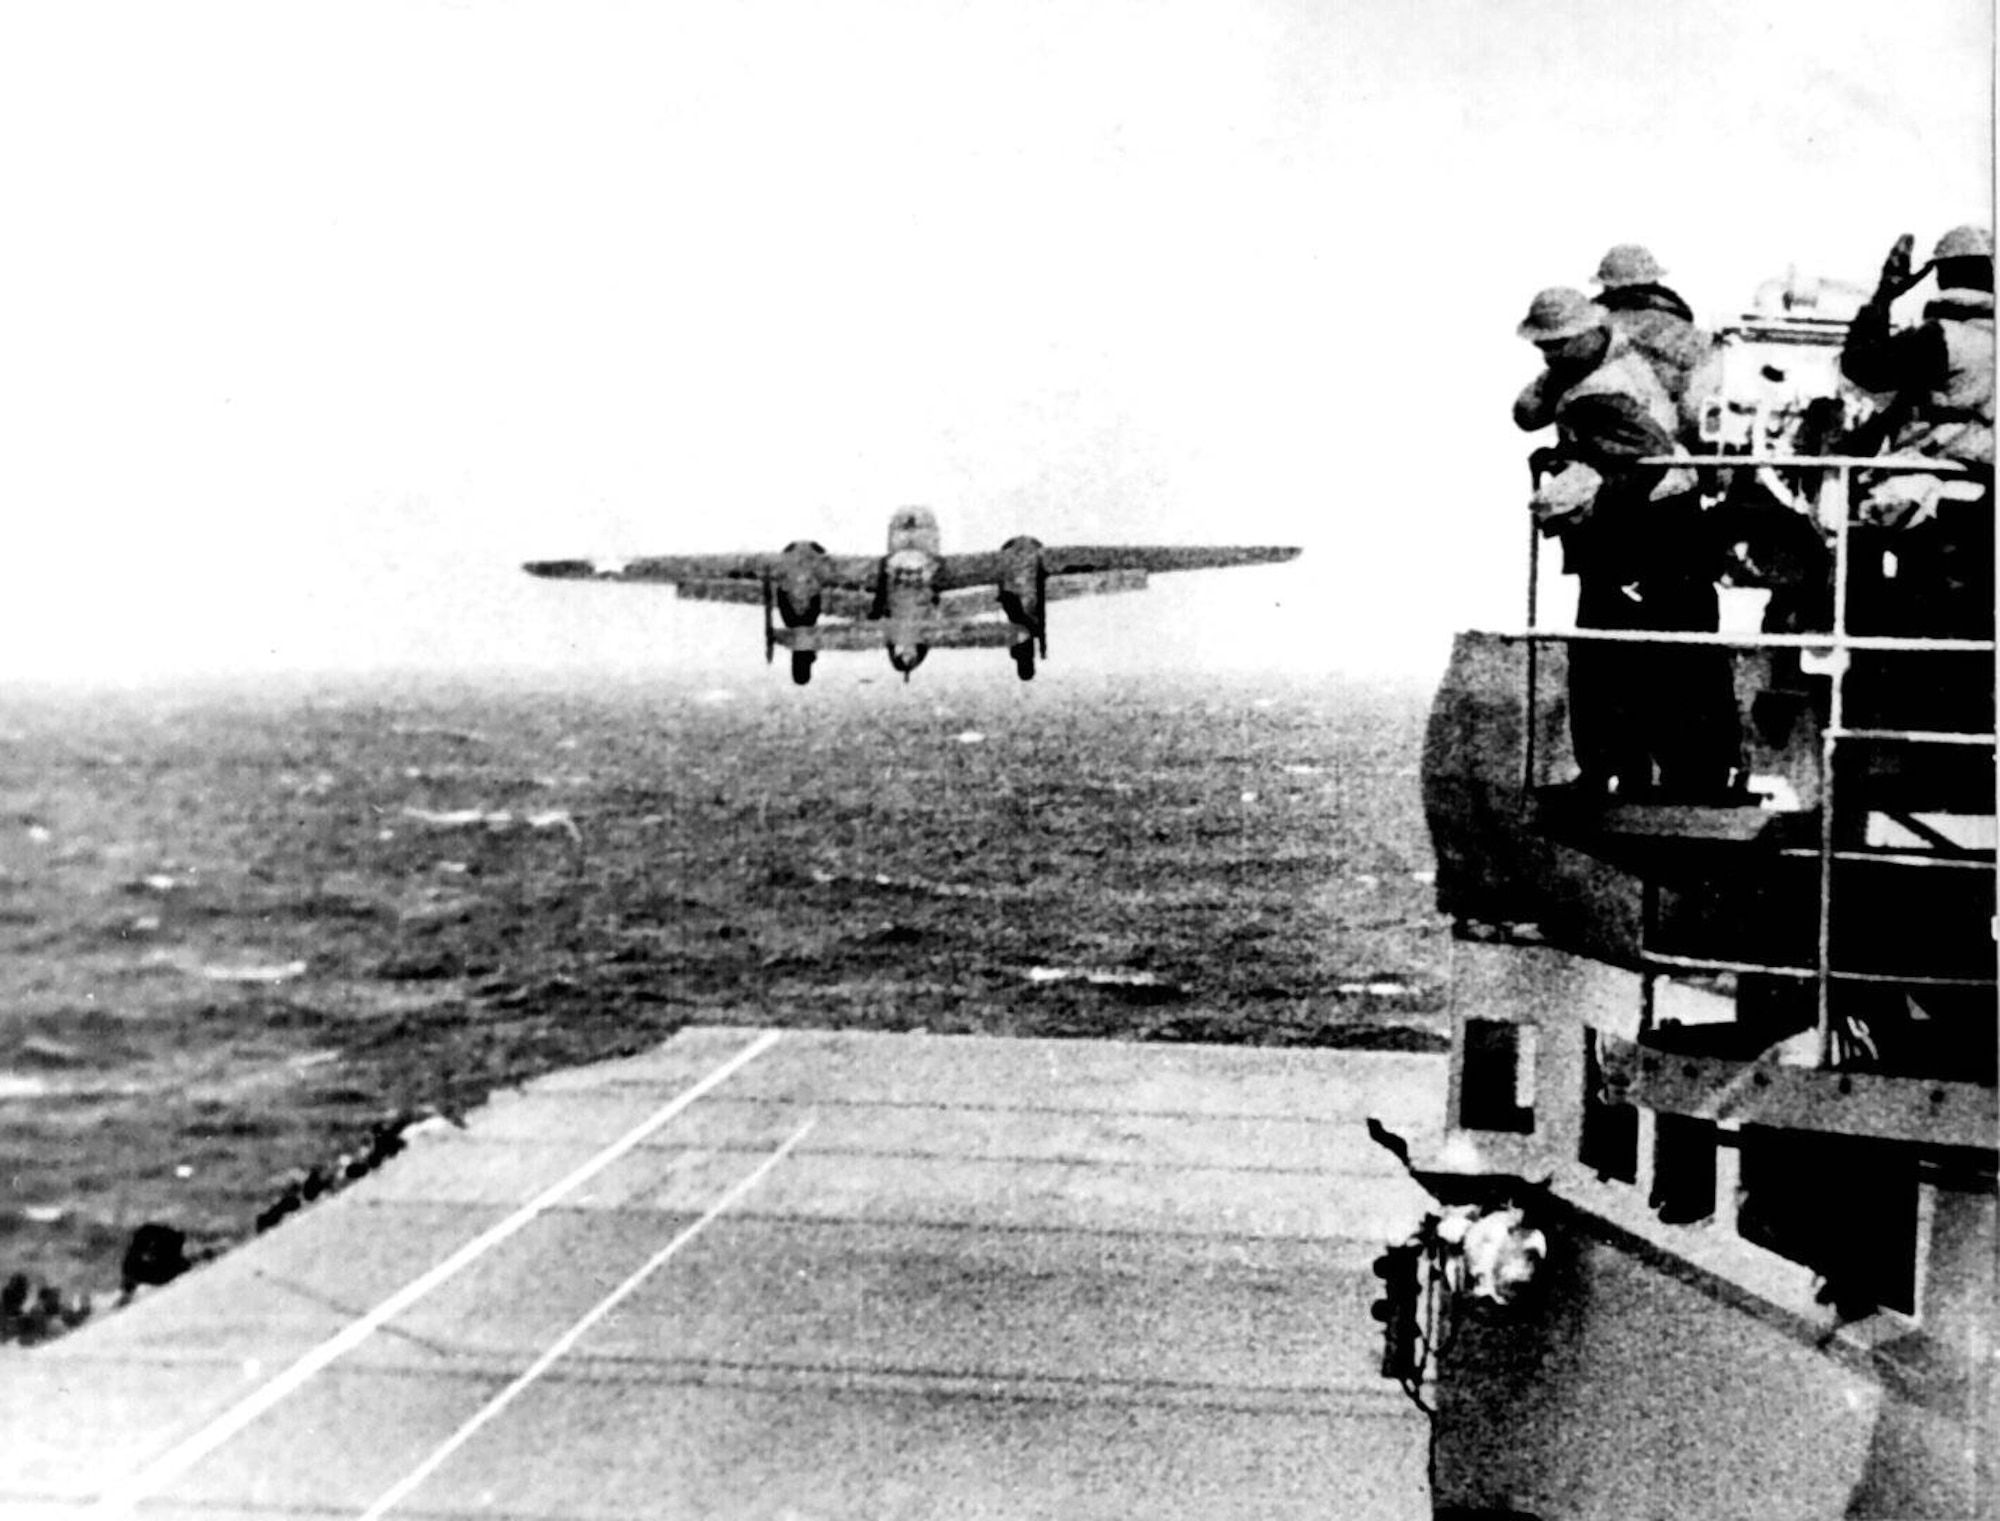 B-25 taking off the deck of the USS Hornet; Doolittle Tokyo raid, April 1942.